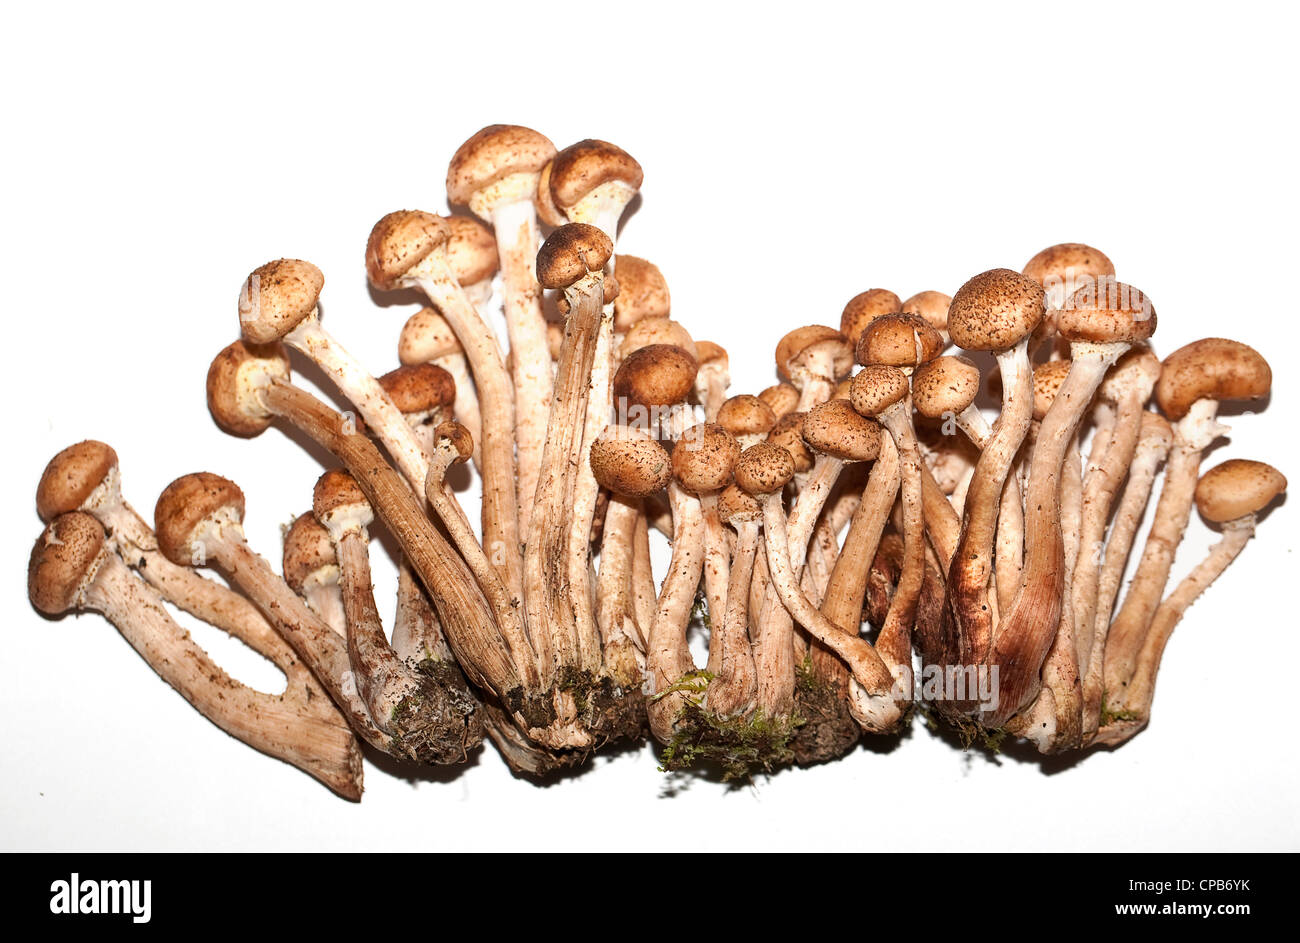 honey mushroom on the white background Stock Photo